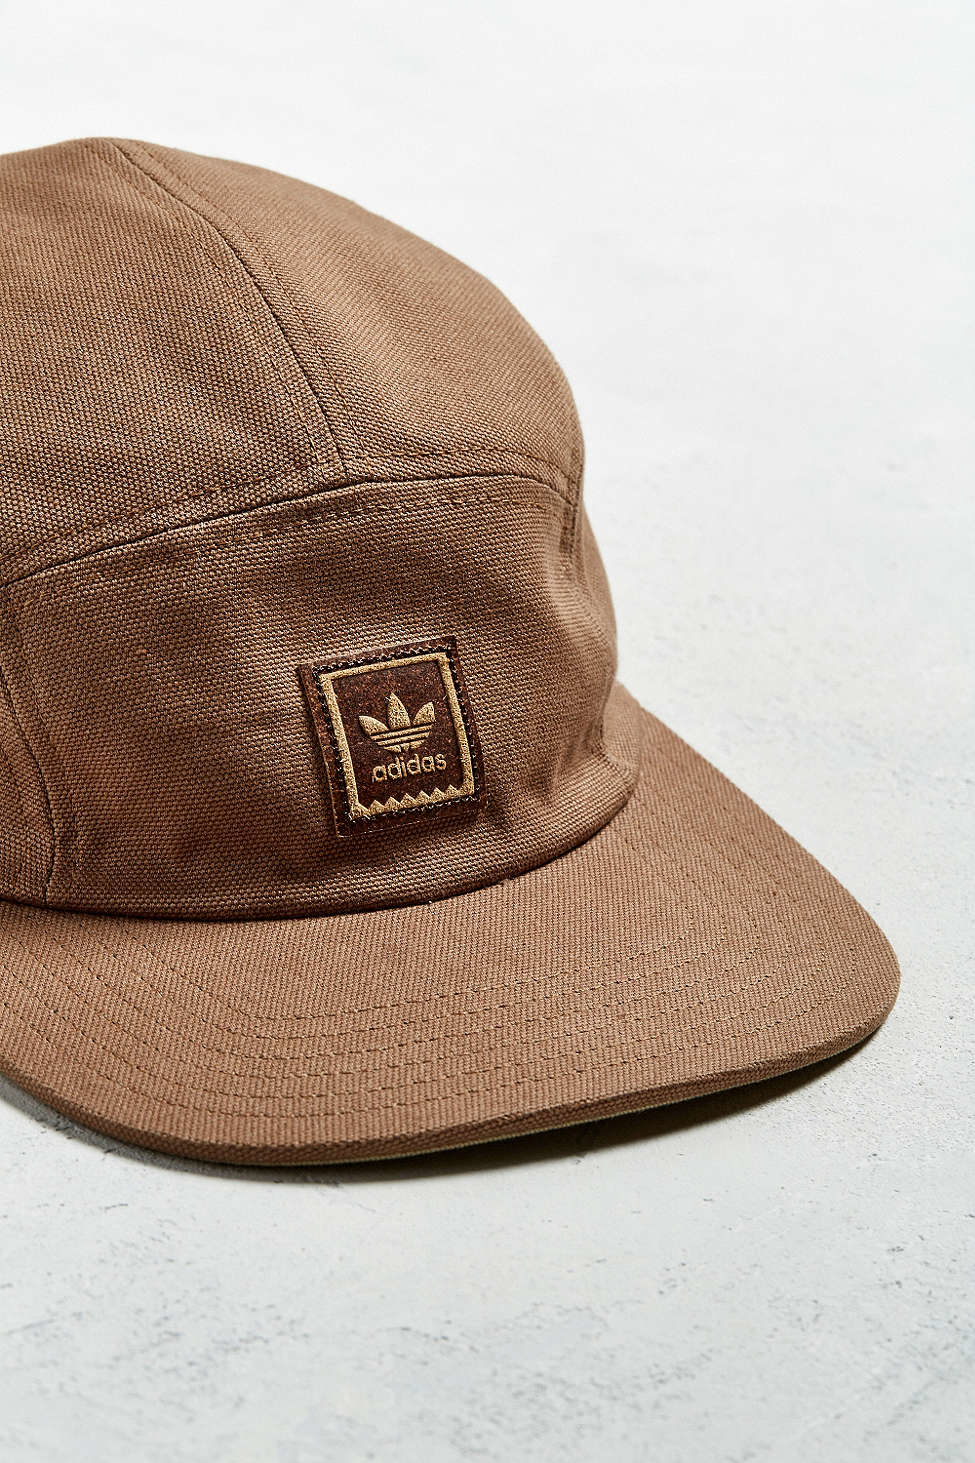 adidas Originals Cotton Sk8 5-panel Hat in Brown for Men - Lyst